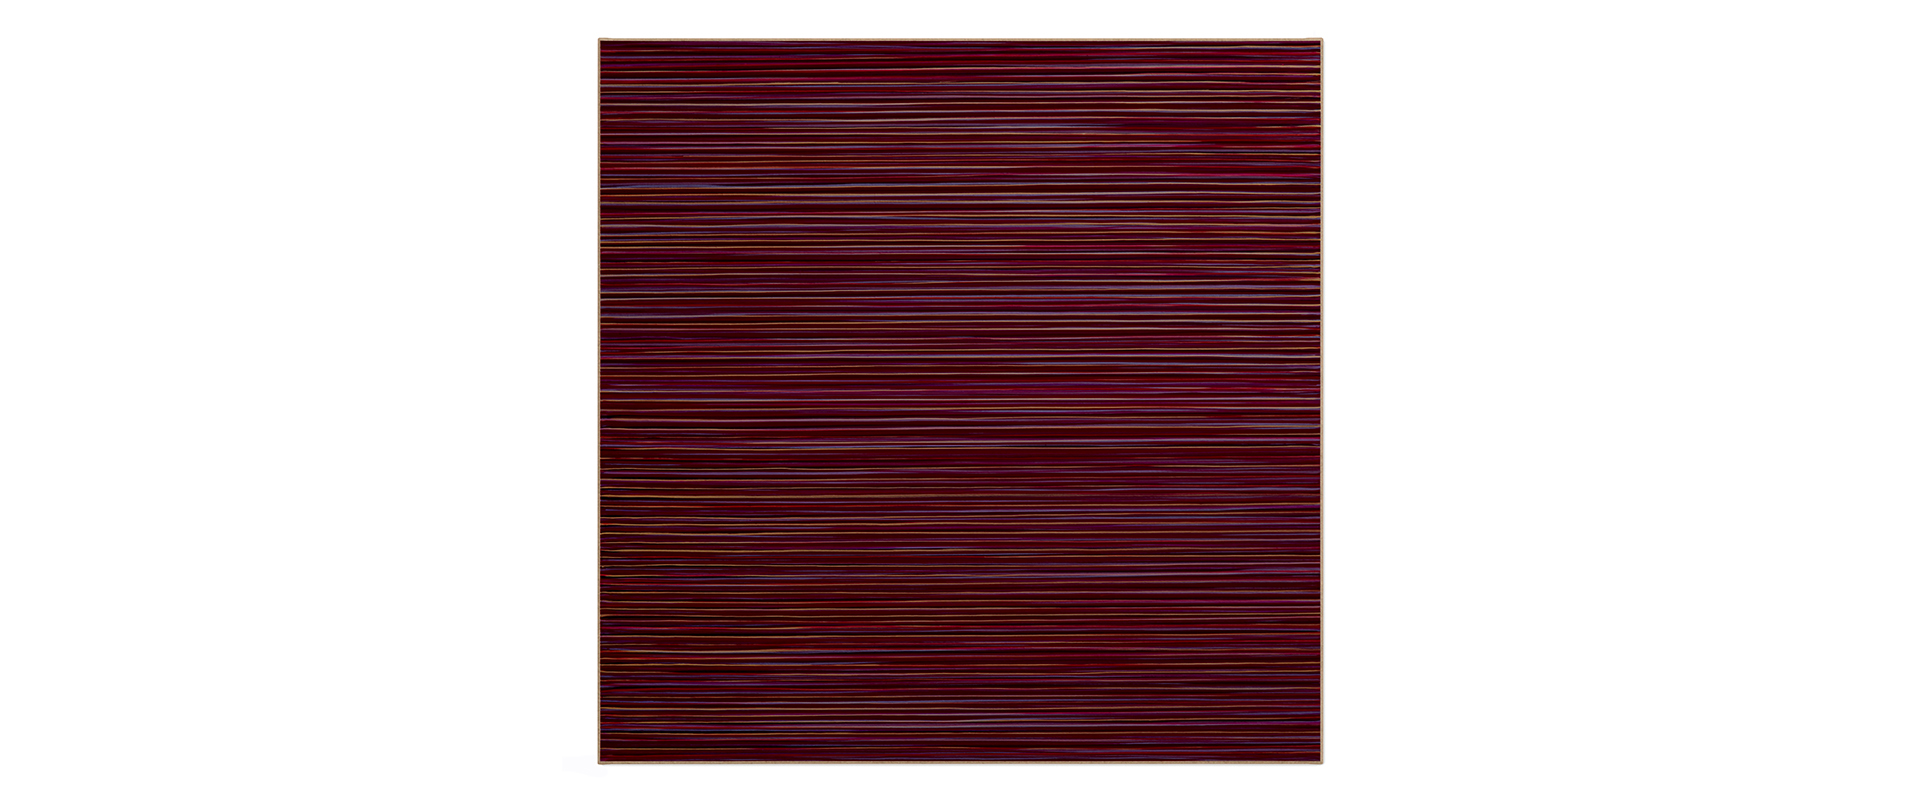 Ohne Titel (2219) – 2022, Acryl auf Leinwand, 70 x 70 cm